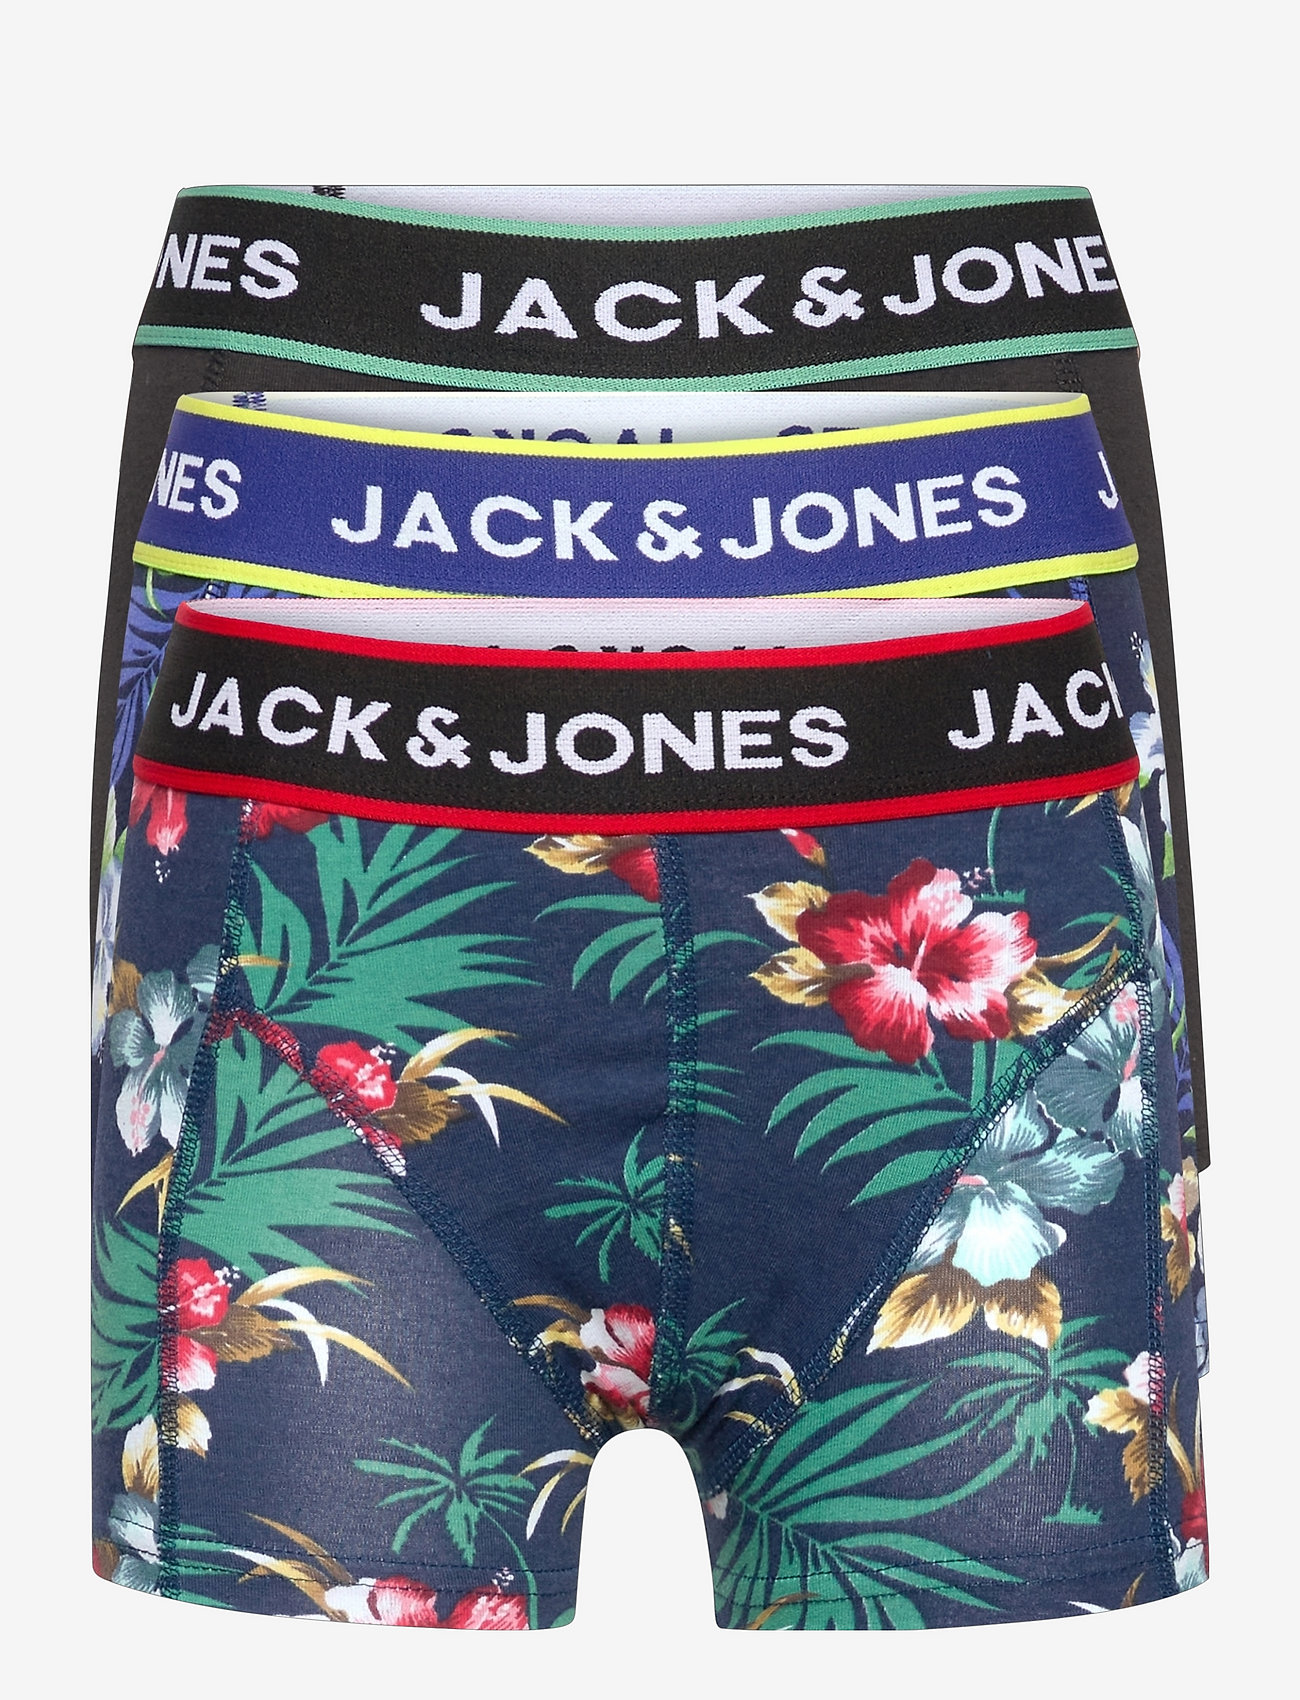 Jack & Jones Jacflower Trunks 3 Pack. Jr - Underwear | Boozt.com